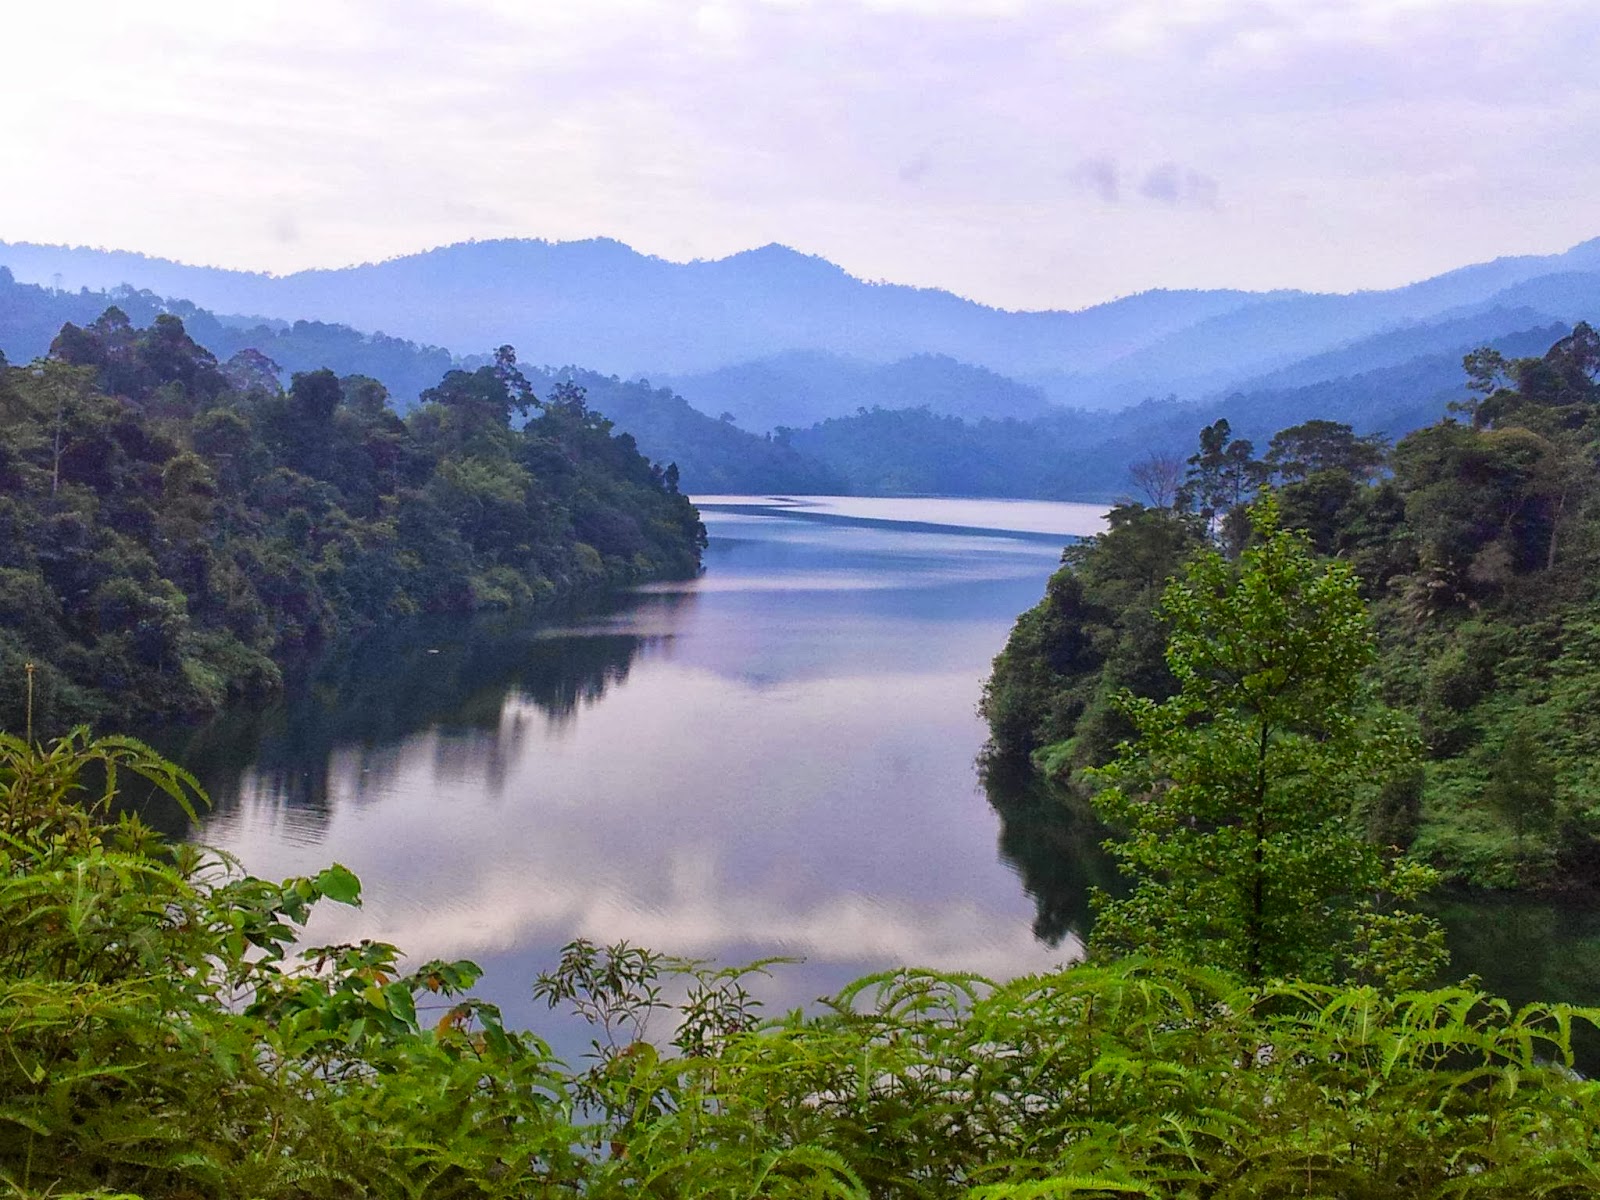 haPpY HaPpY: Revisiting Perez, Hulu Langat and Semenyih Dam